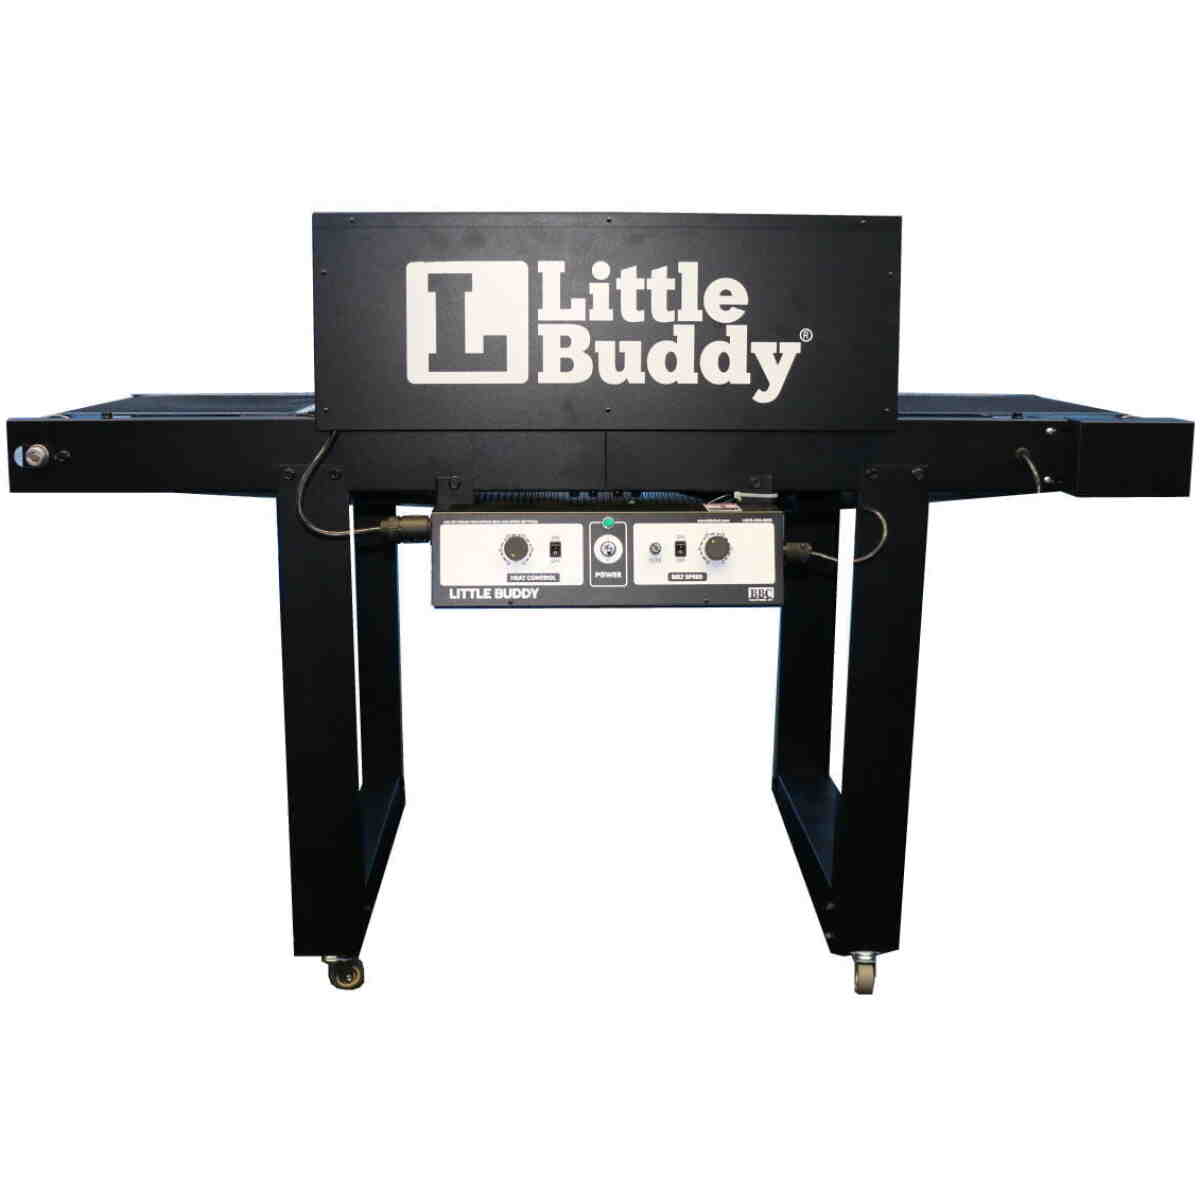 Bbc® Little Buddy Conveyor Dryer 18"X3 0"C,18"T,18"D 2000W,120V BBC®